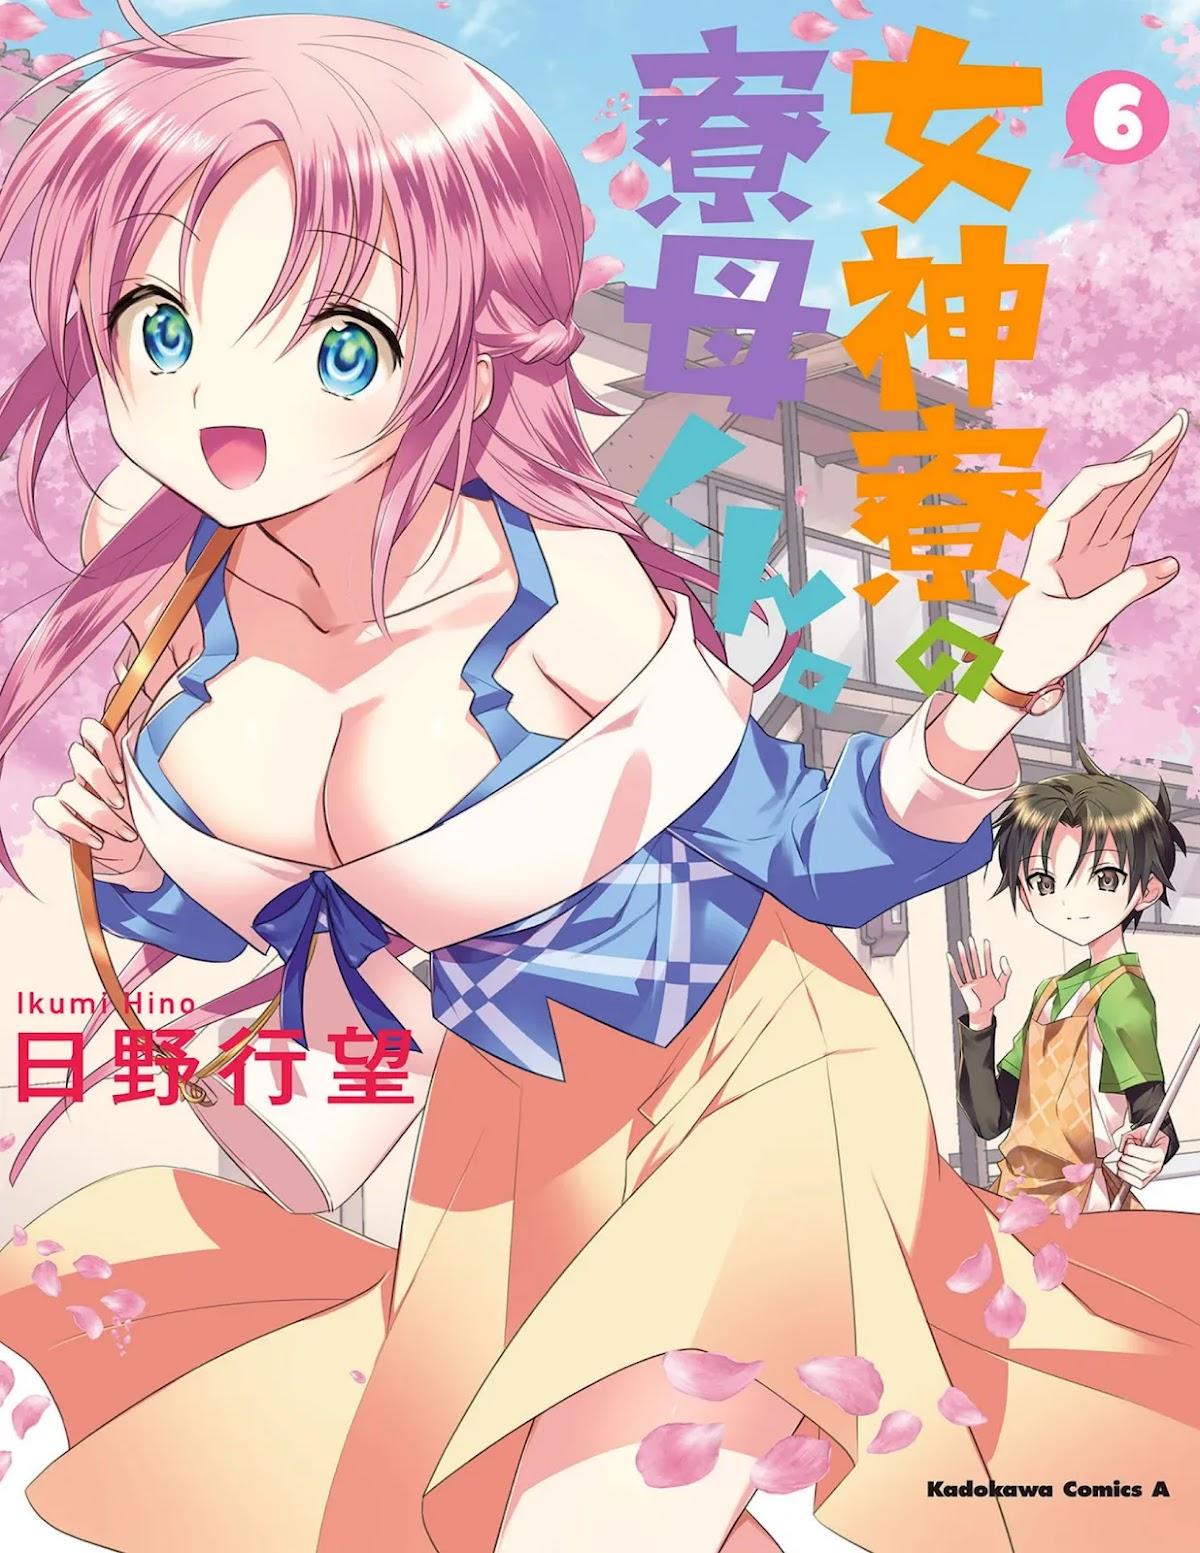 Megami-ryou no Ryoubo-kun. Capítulo 25 - Manga Online